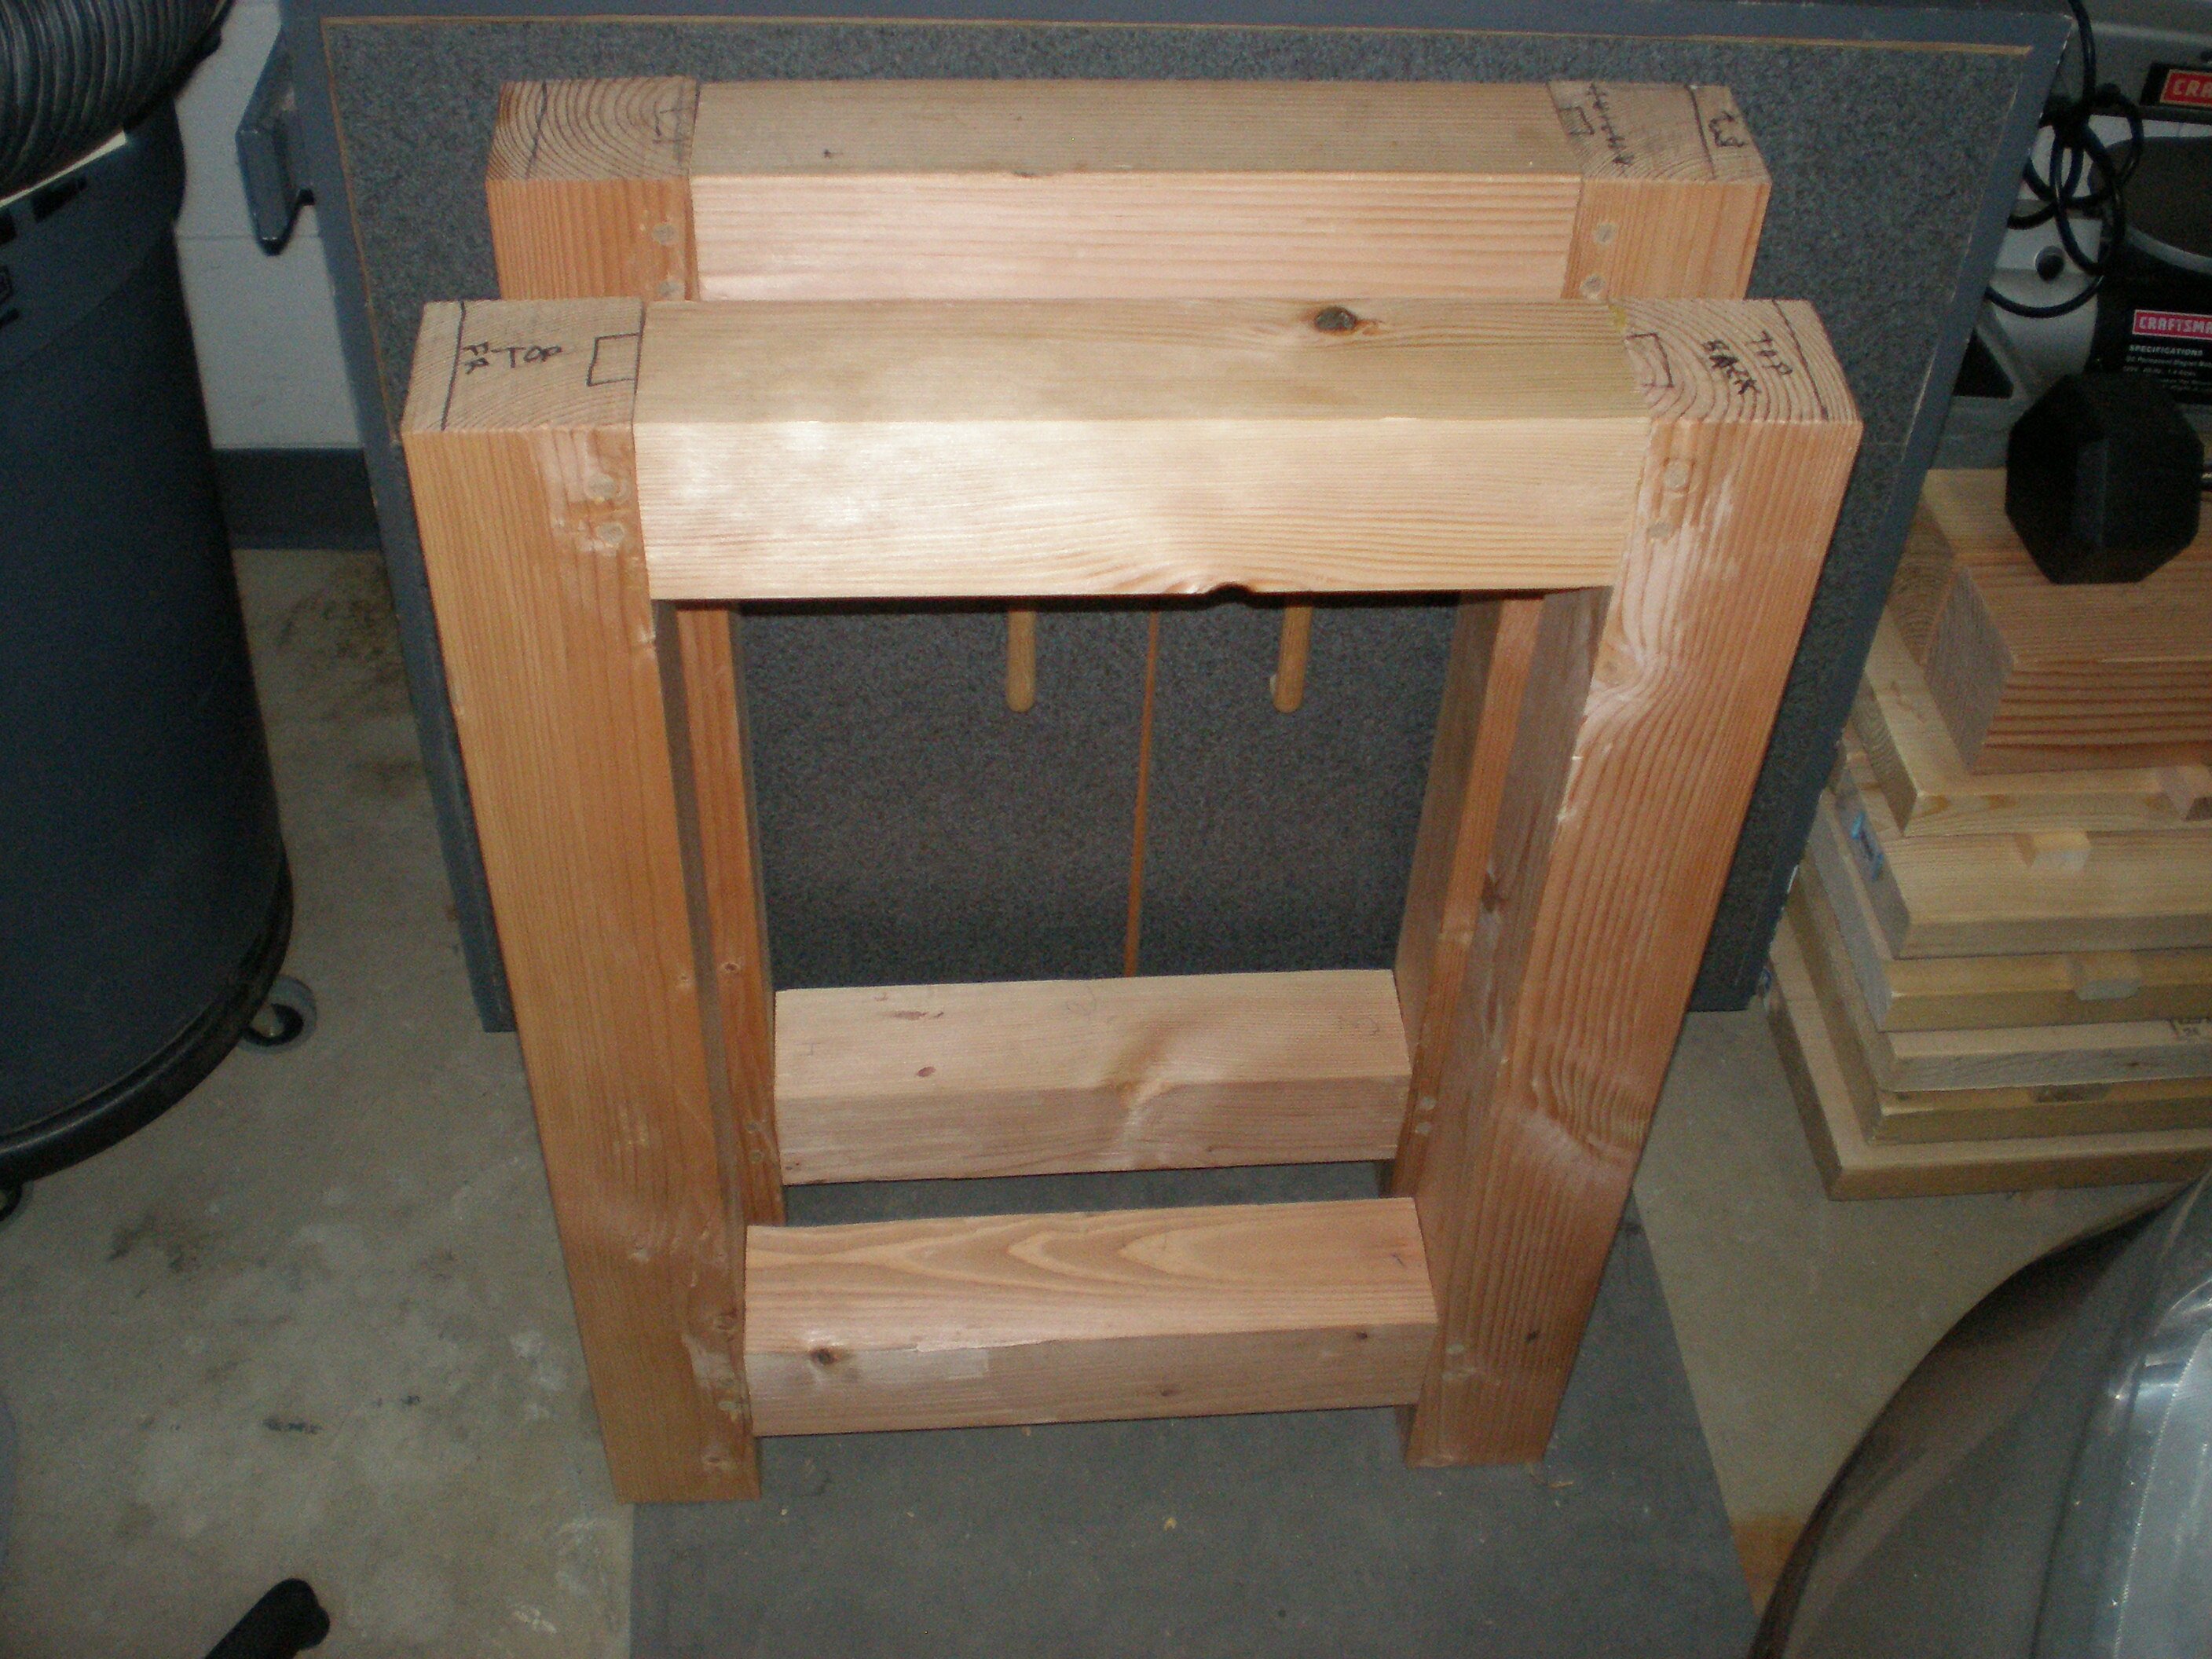 Workbench Frame Kits | Kreg Tables | Work Bench Legs